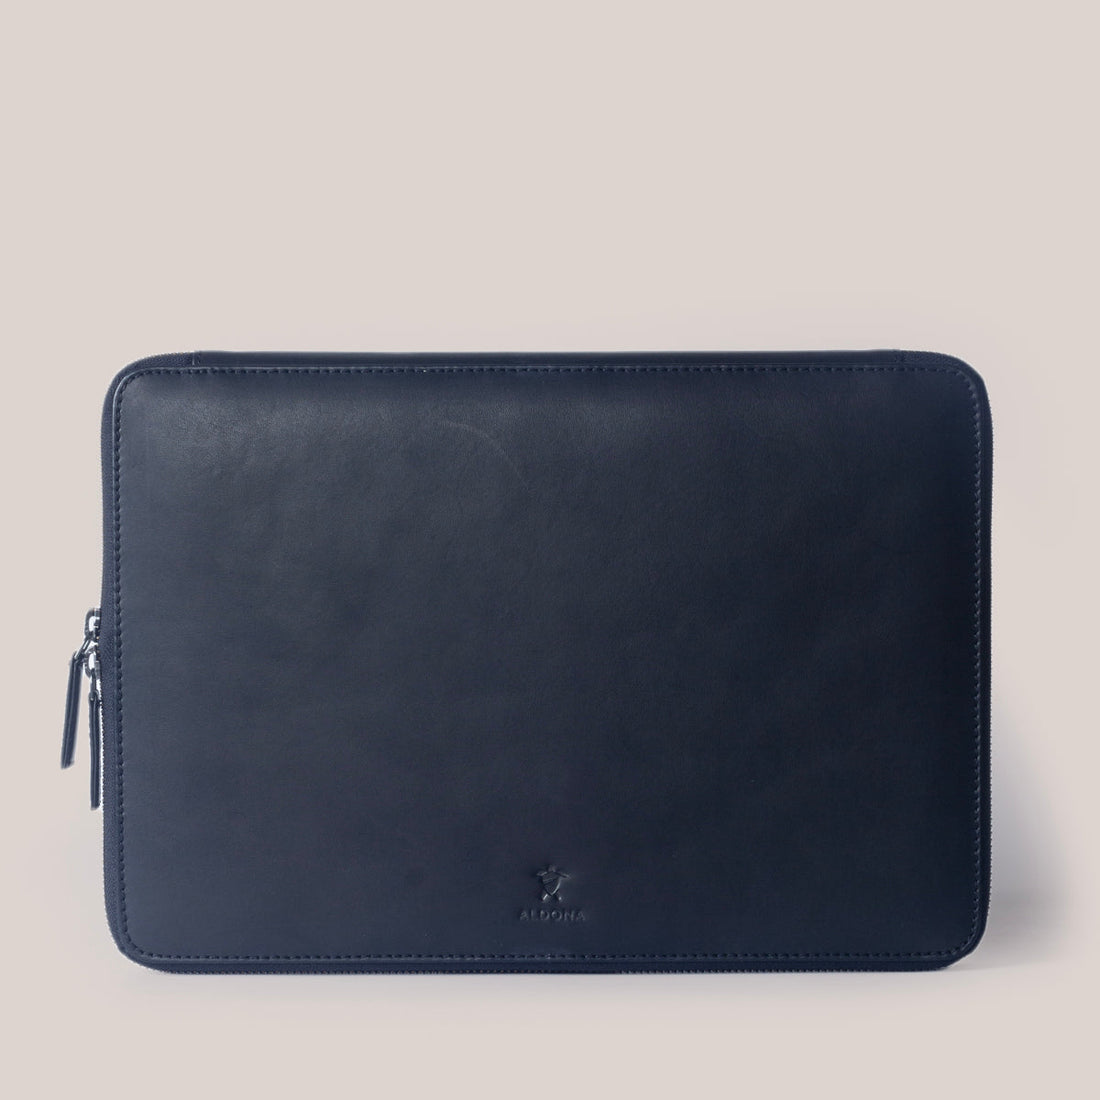 DELL XPS 15 Zippered Laptop Case - Onyx Black